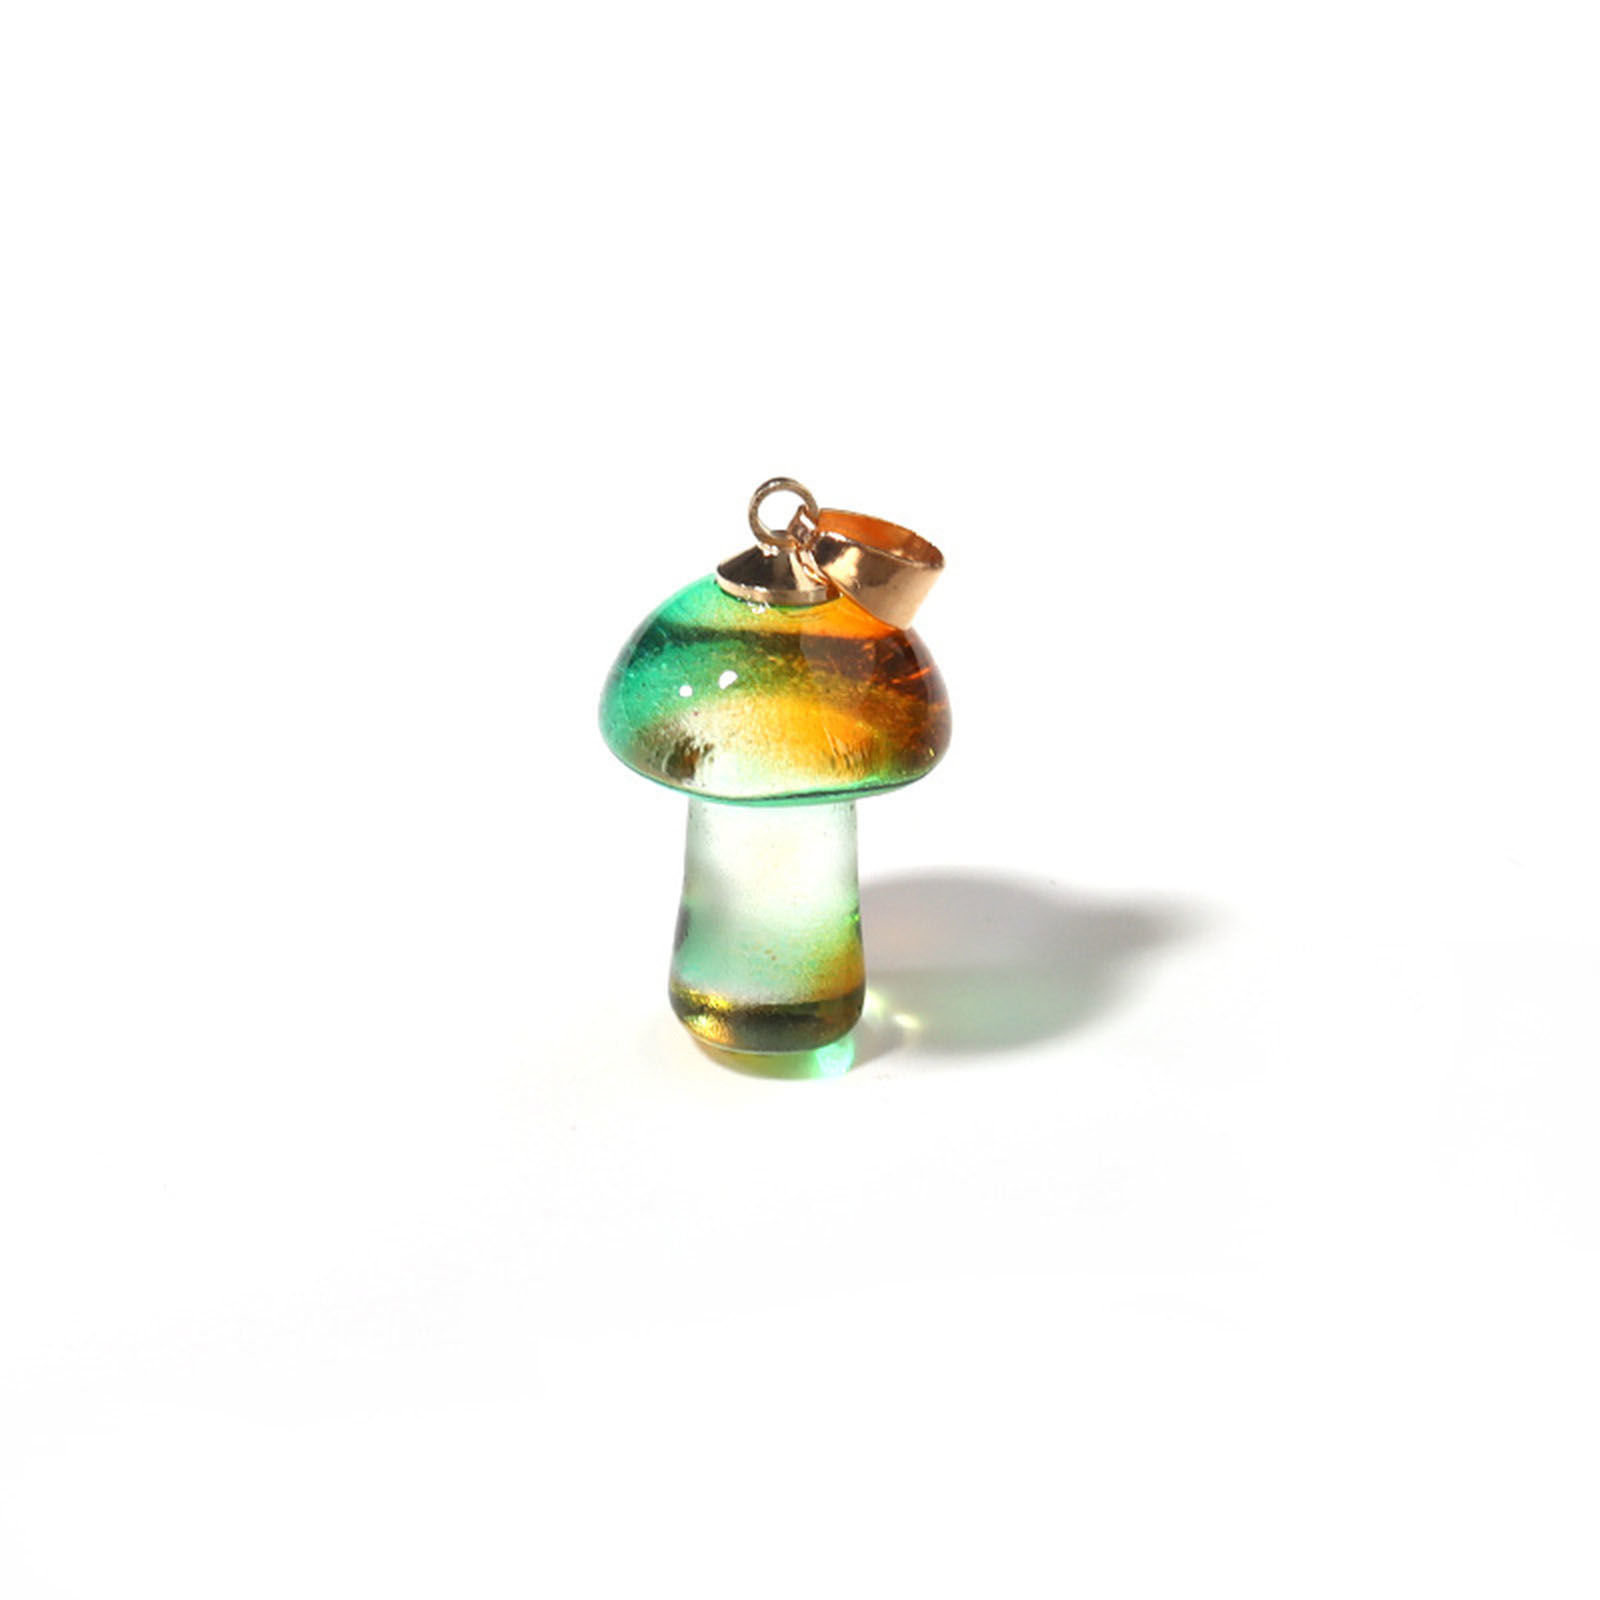 Picture of Lampwork Glass Charms Green & Orange Mushroom 3D 25mm x 15mm, 2 PCs